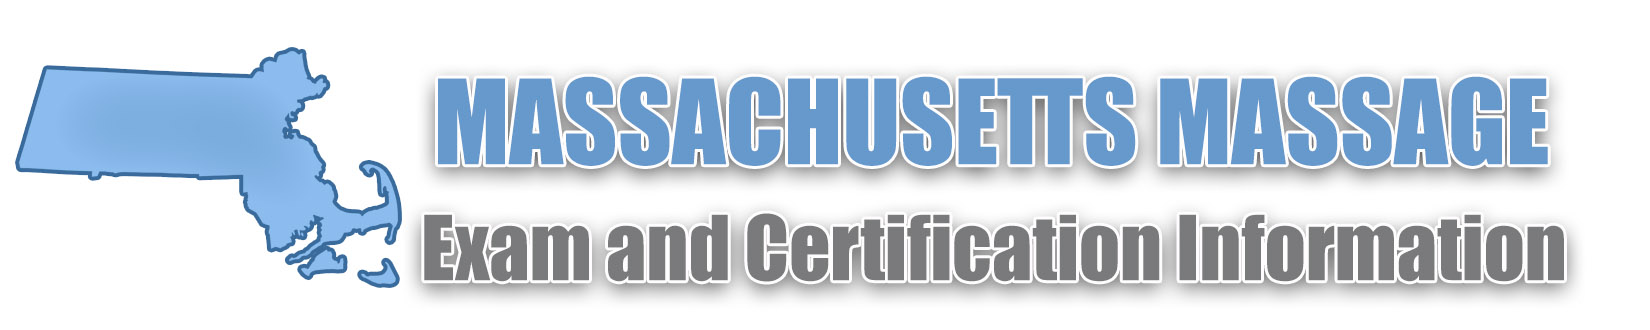 Massachusetts MBLEX Massage Exam and Certification Information